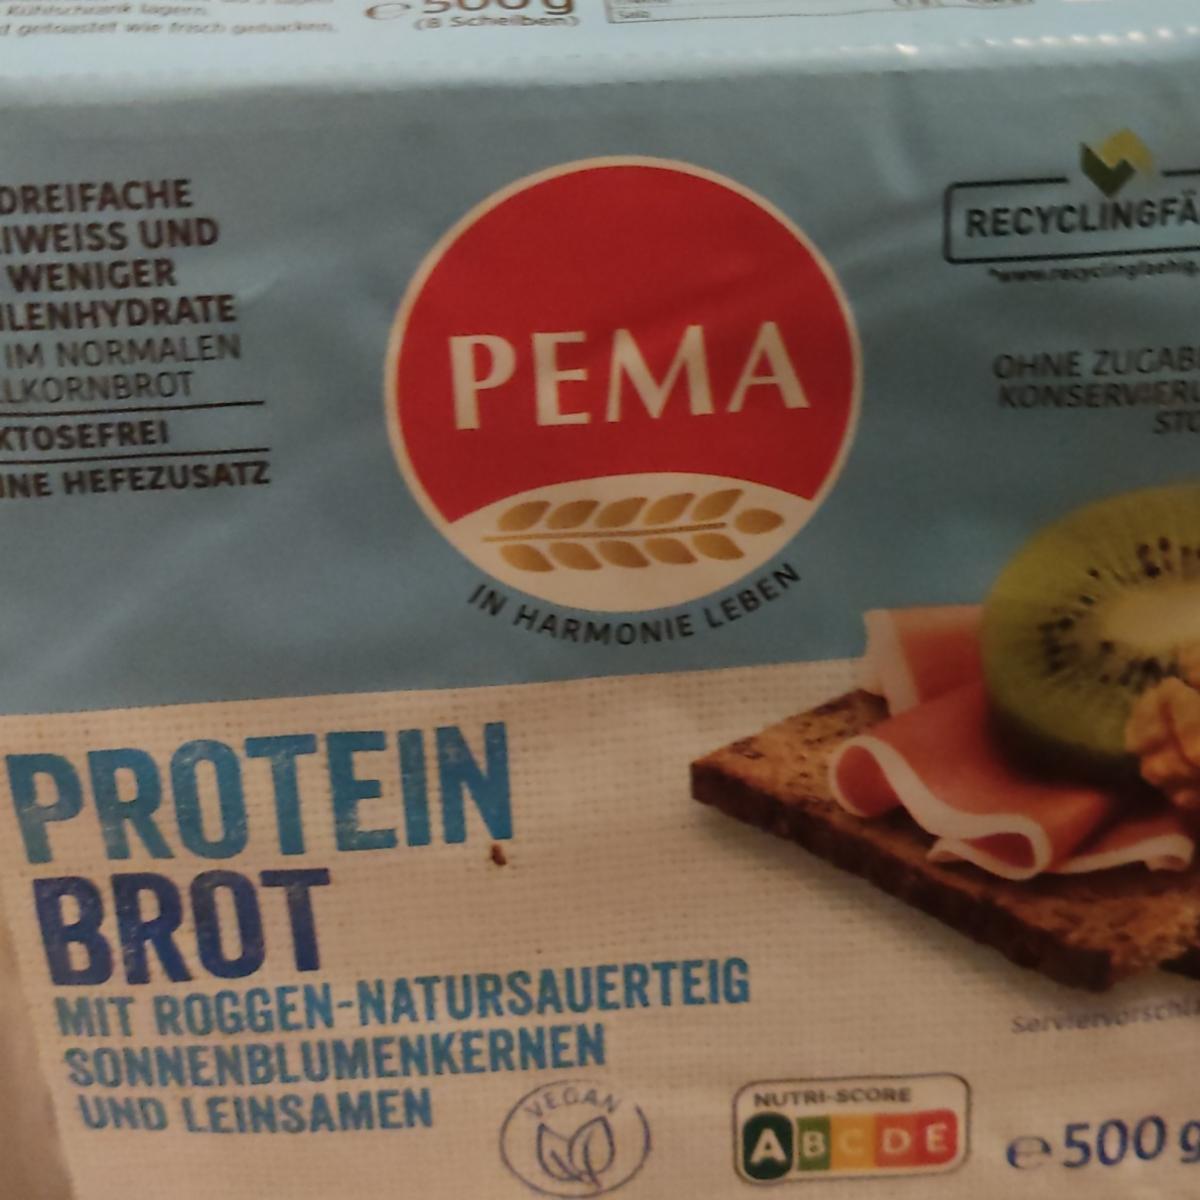 Фото - Protein Brot Pema